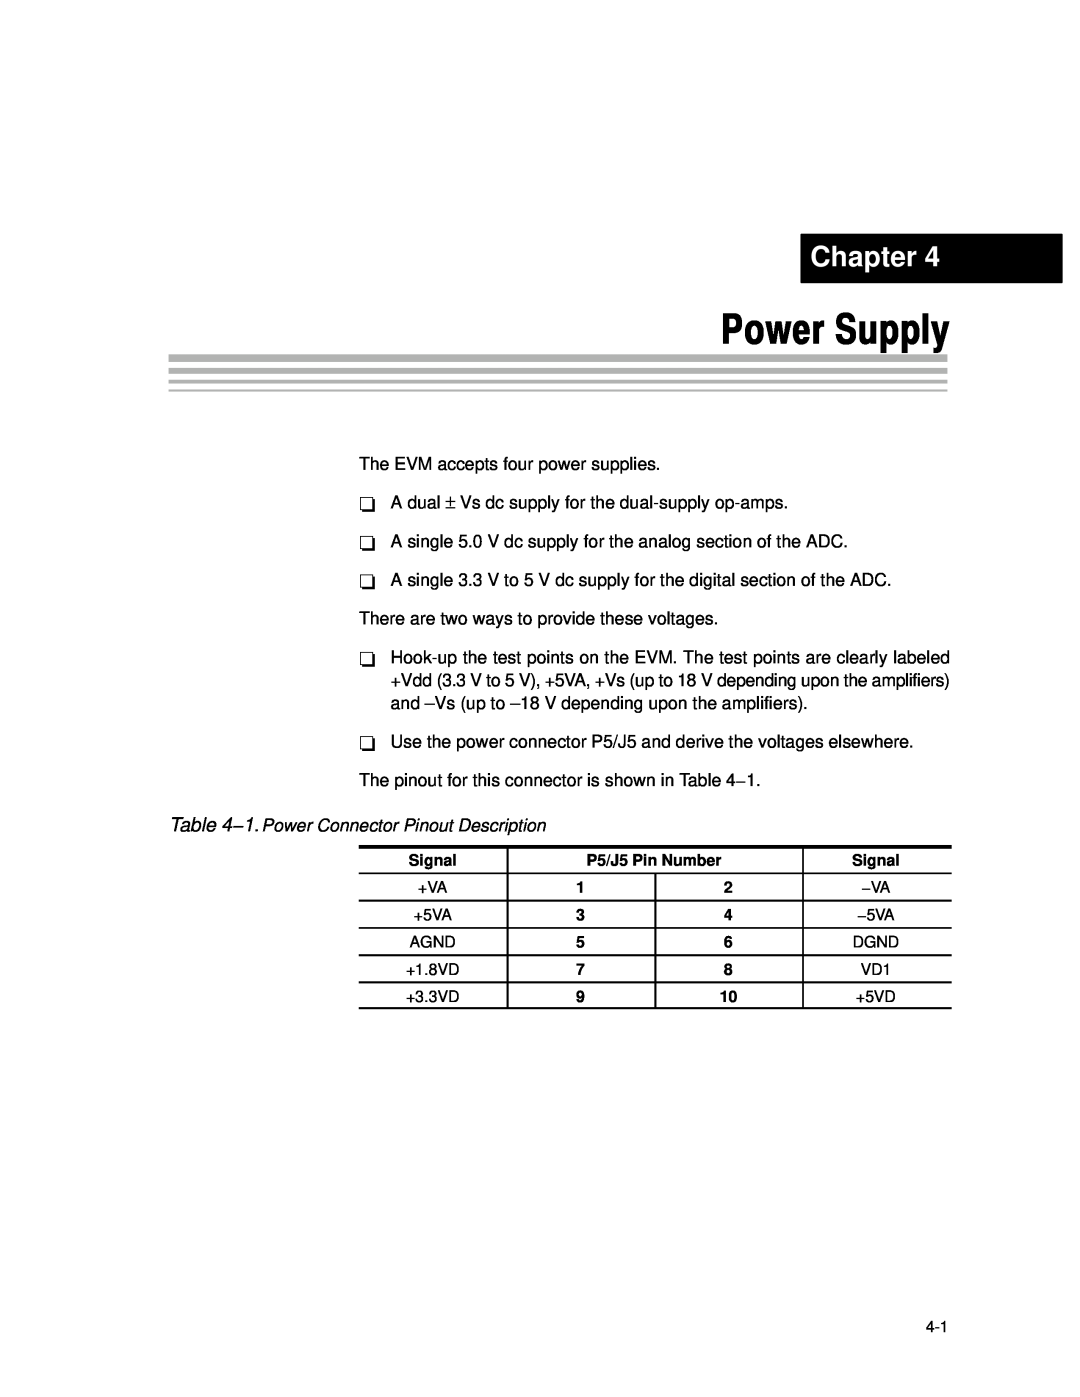 Texas Instruments TLC3578EVM manual Power Supply, Chapter, 1. Power Connector Pinout Description 